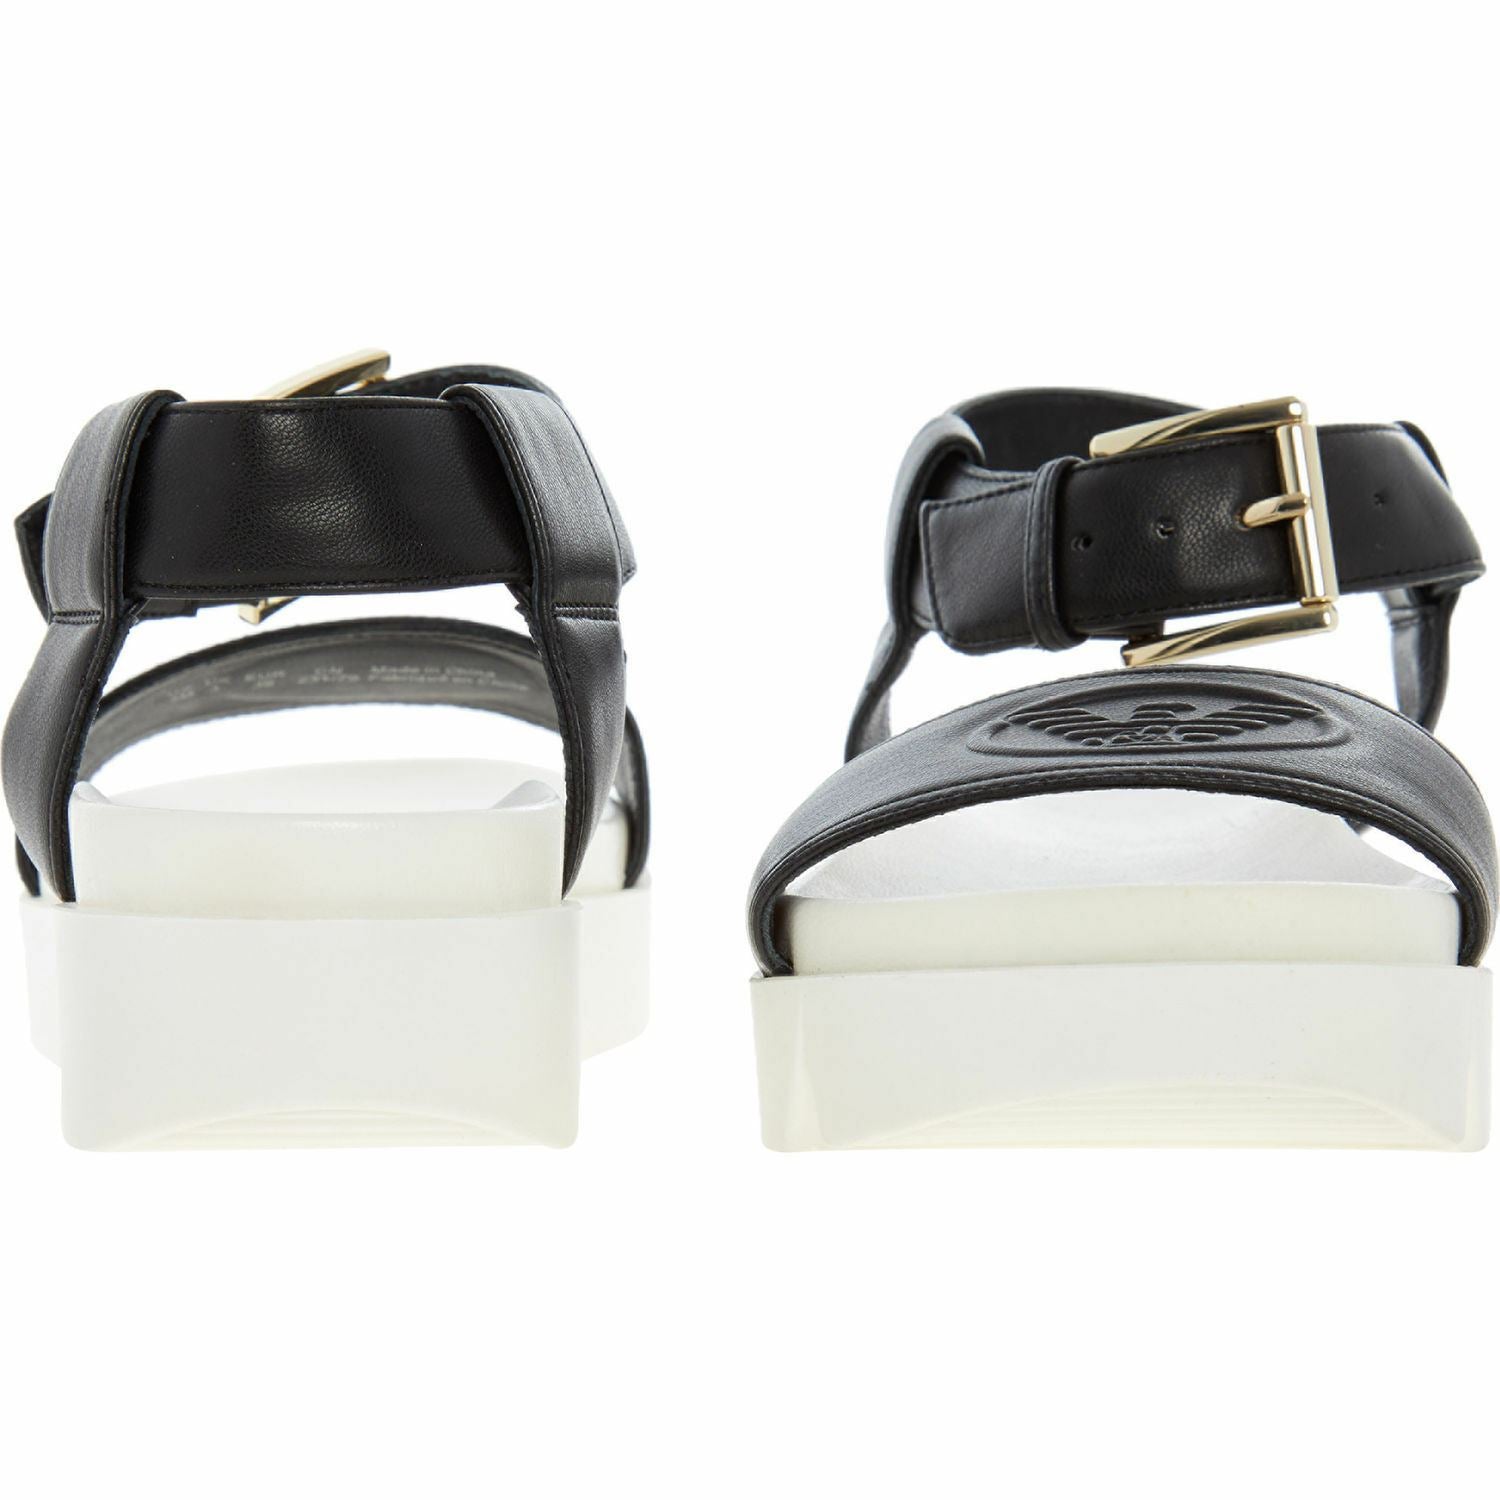 EMPORIO ARMANI Women's Black & White Buckled Flat Sandals Size UK 4 / EU 37